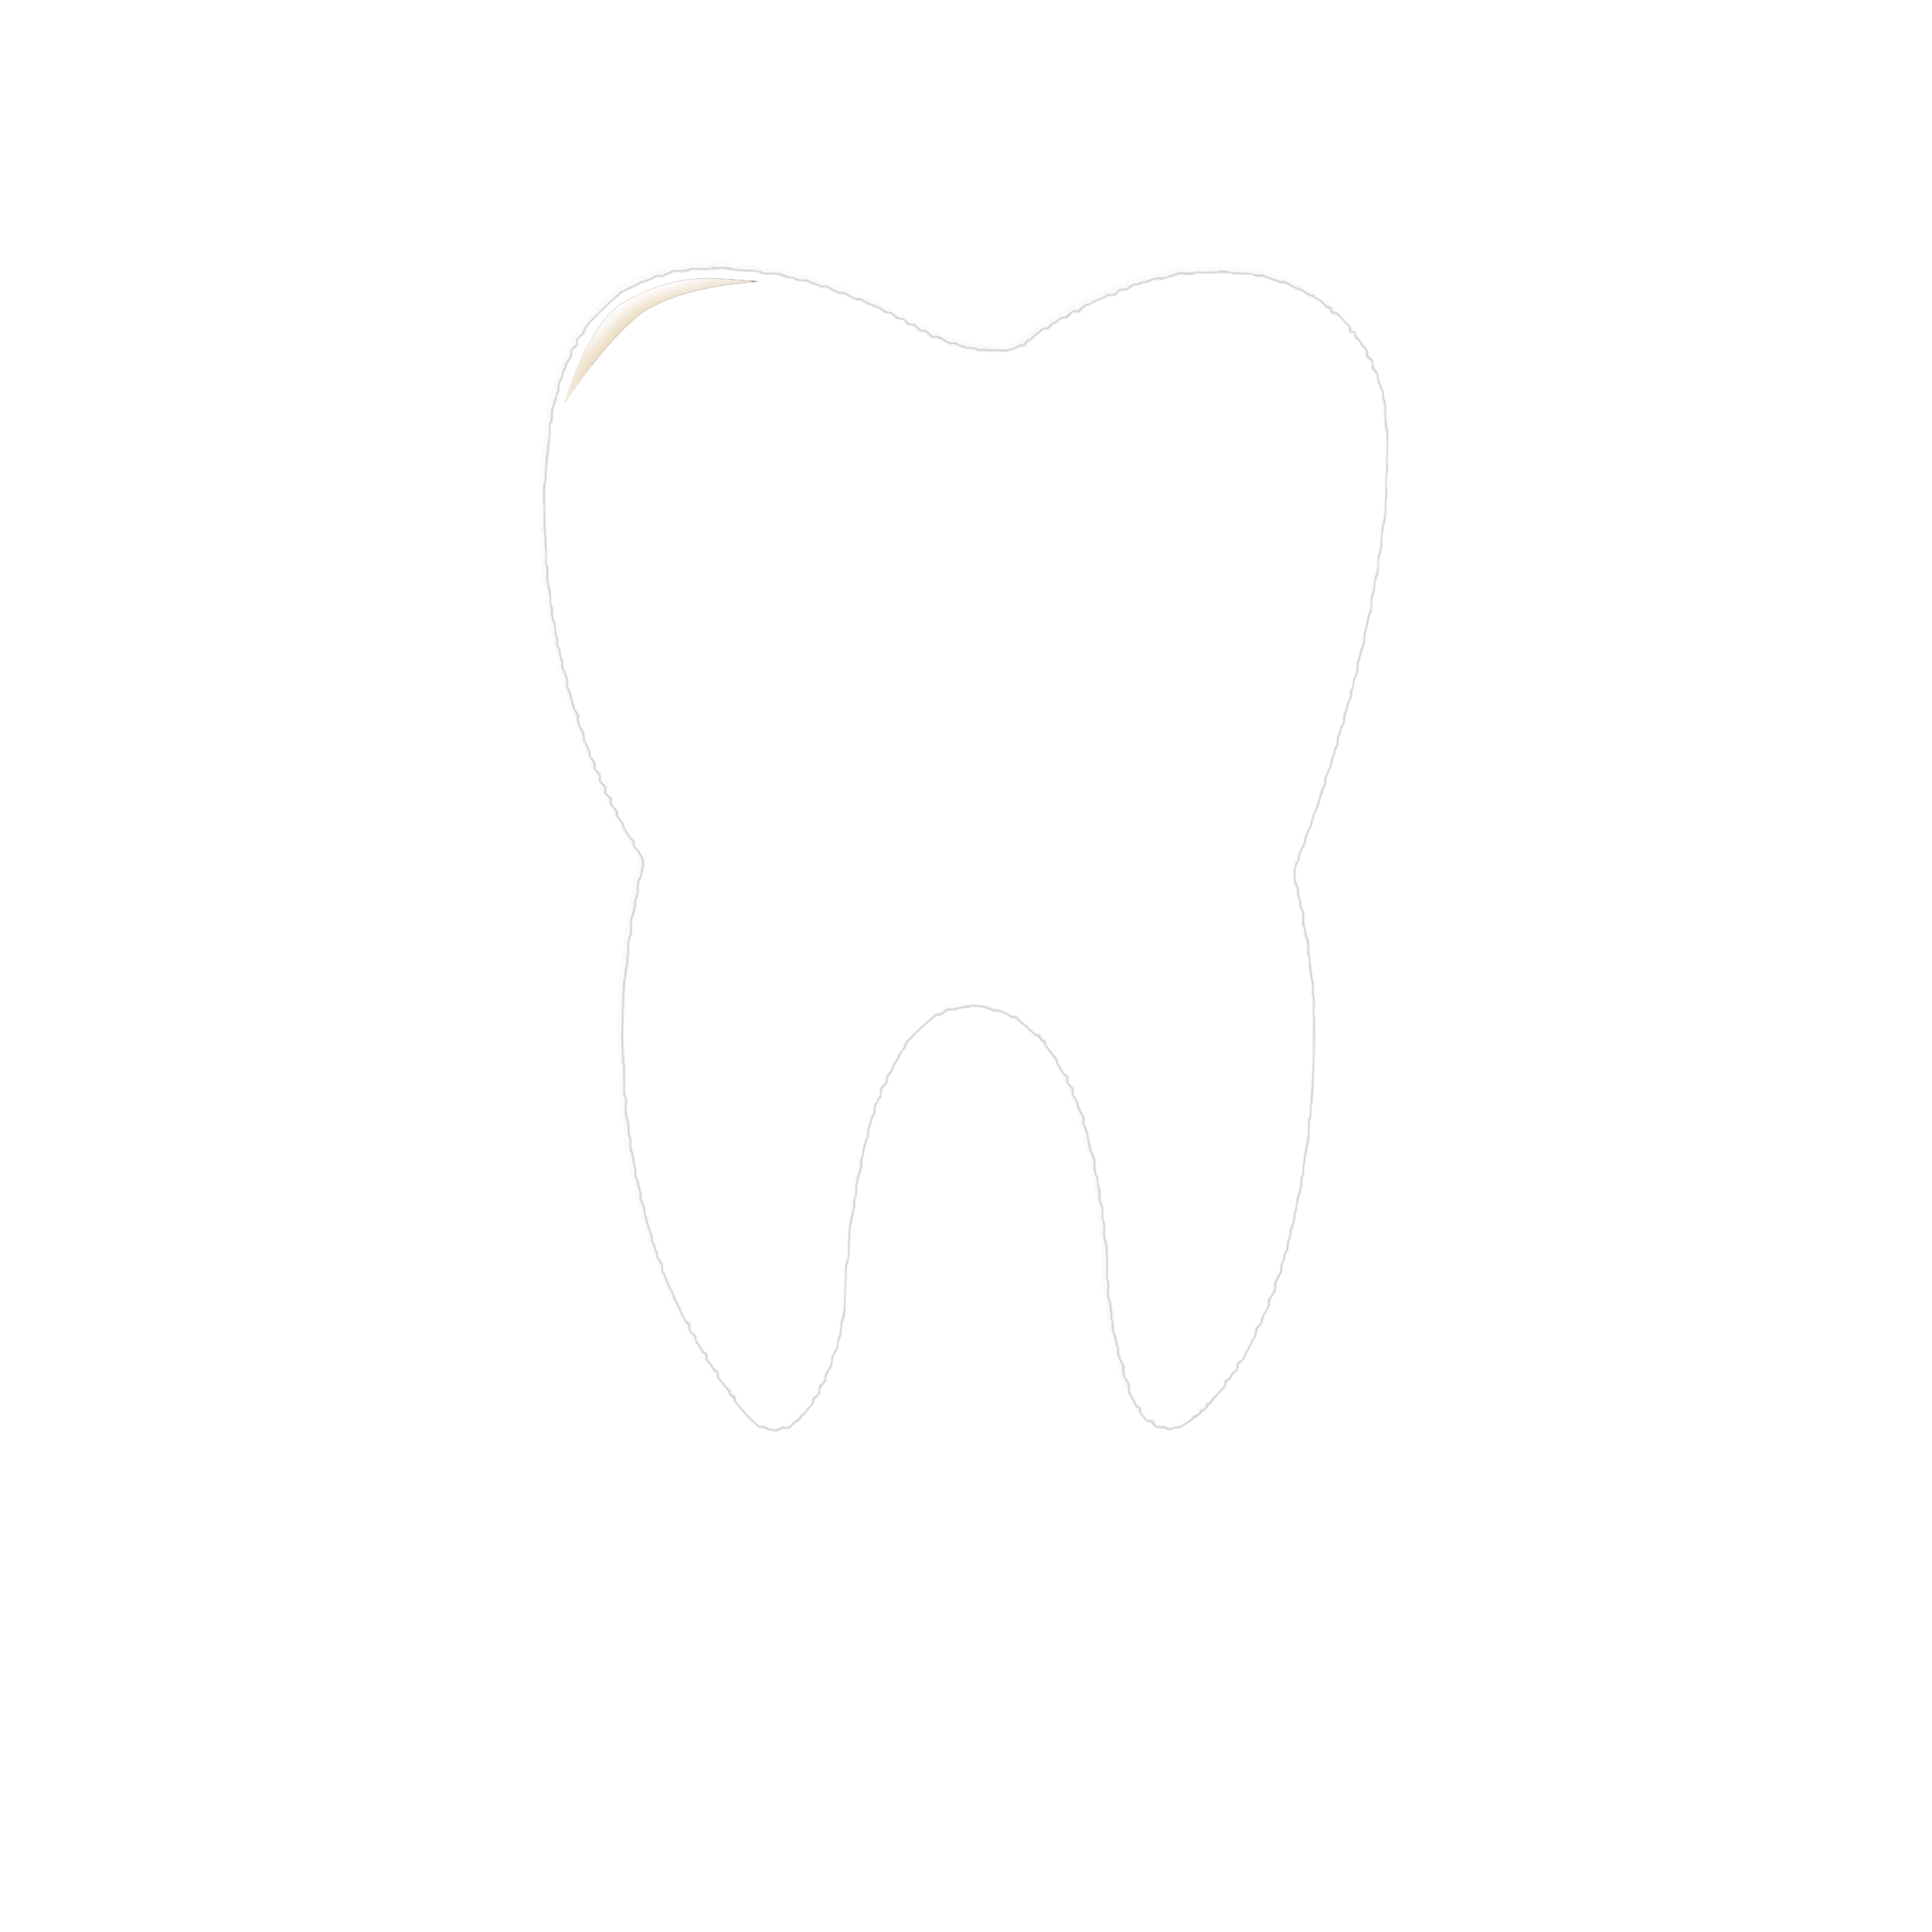 Cheshire Dental Centre